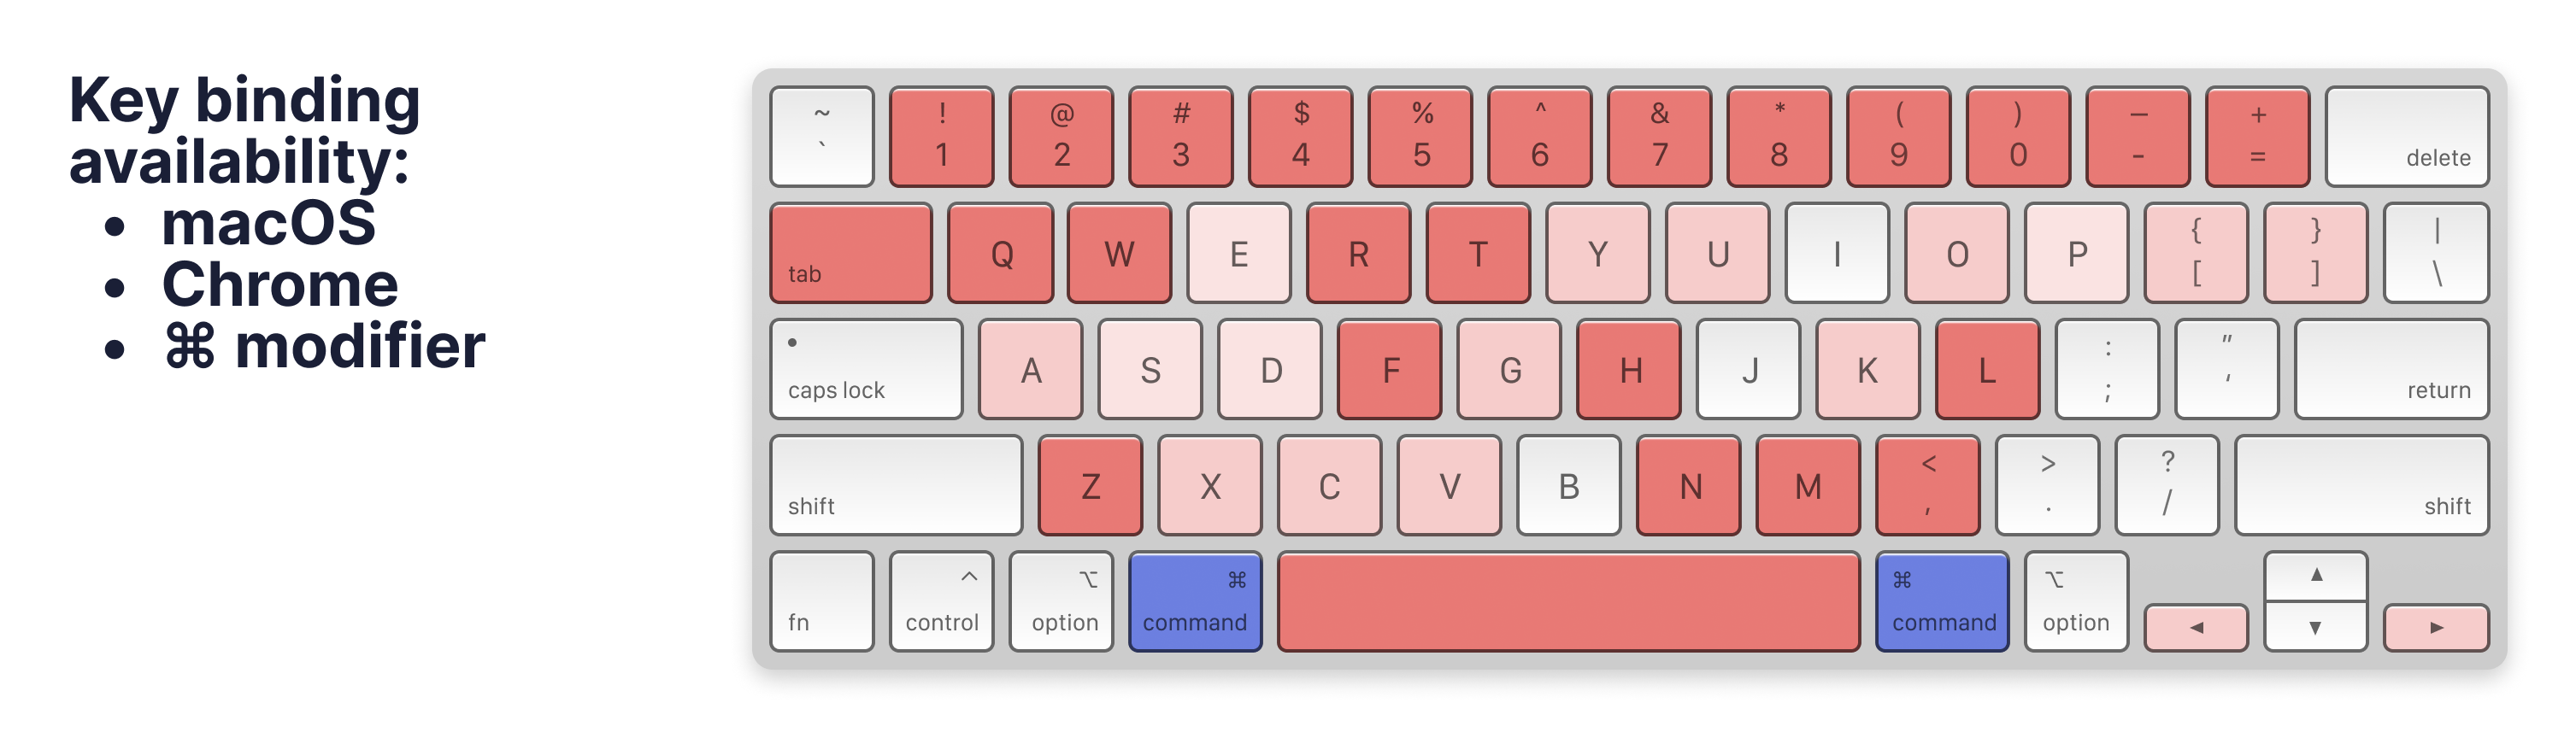 Keyboard shortcut availability: macOS+Chrome+cmd